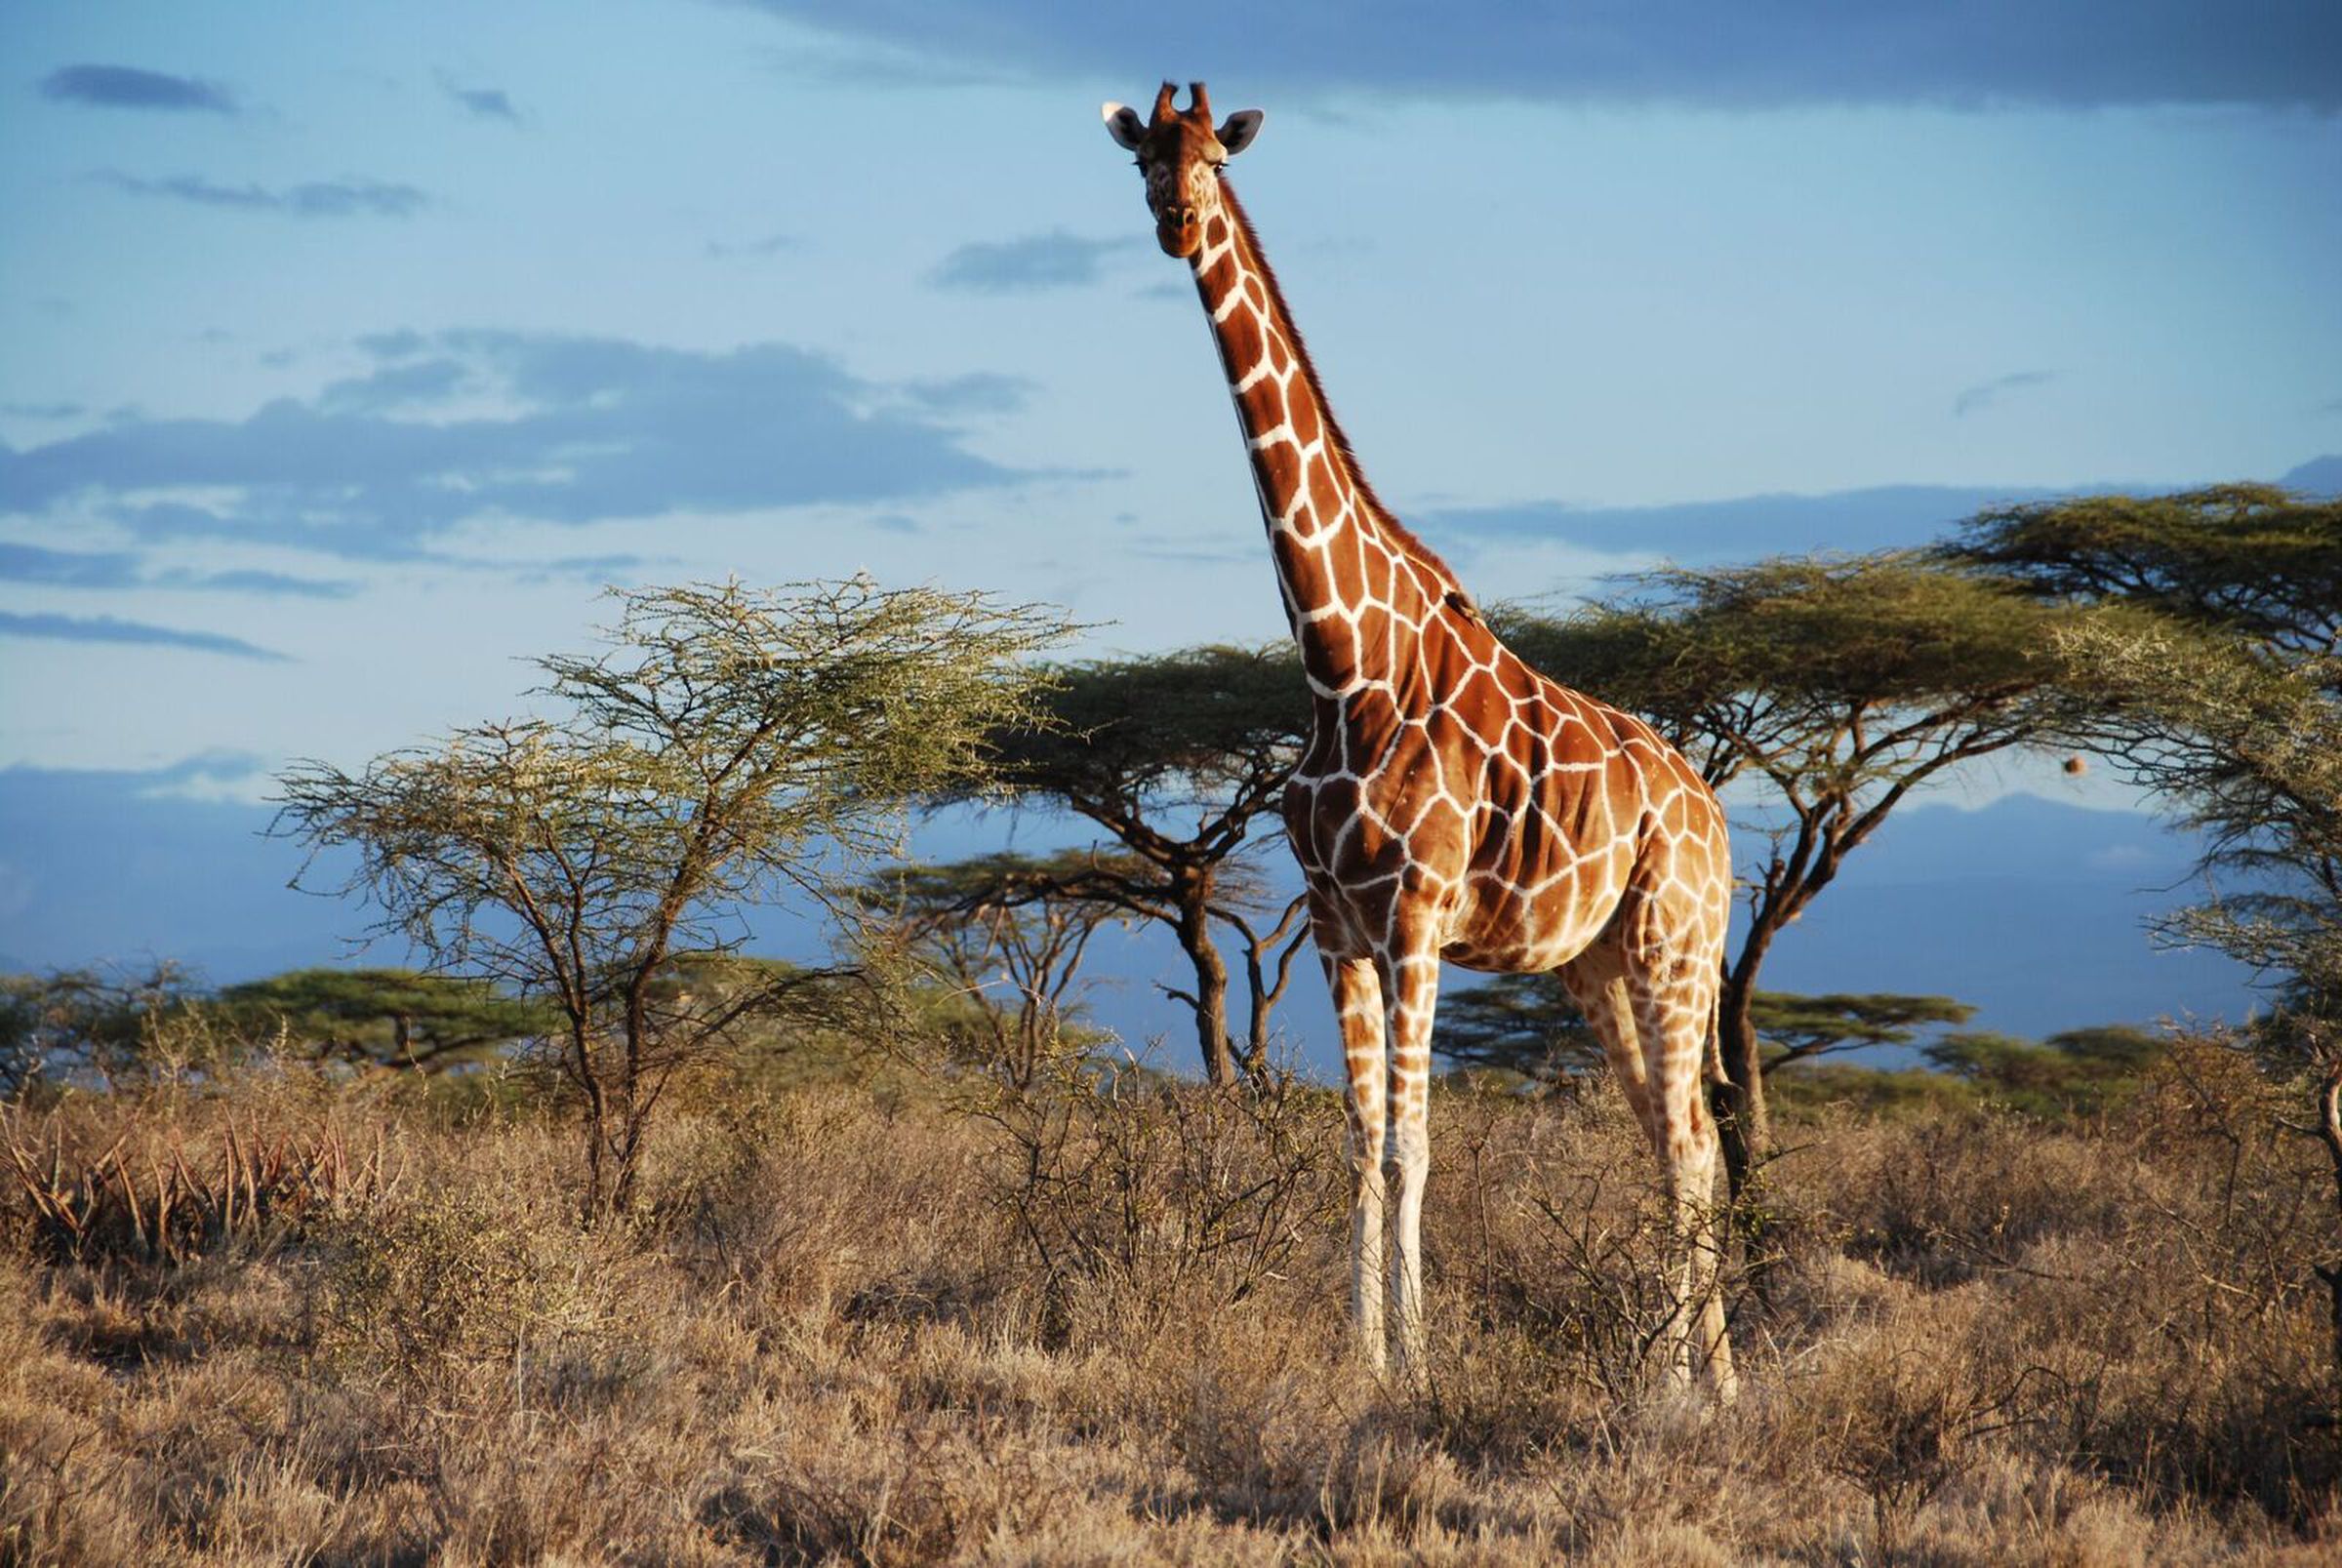 The reticulated giraffe